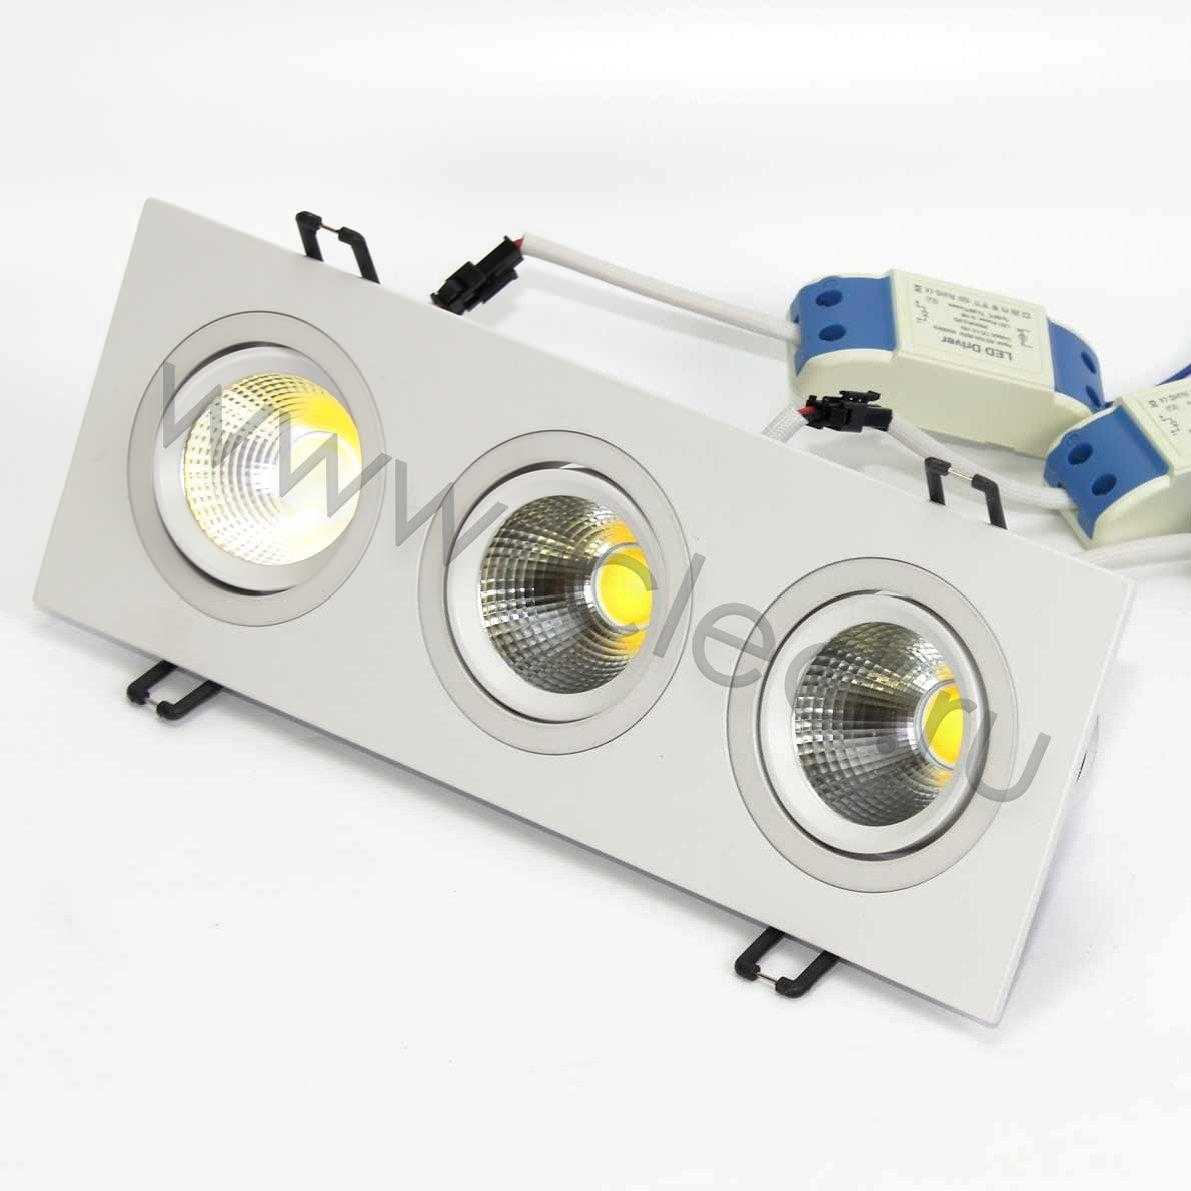 Светодиодные светильники Светодиодный светильник встраиваемый 99.3 series white housing BW154 (15W,220V,day white)